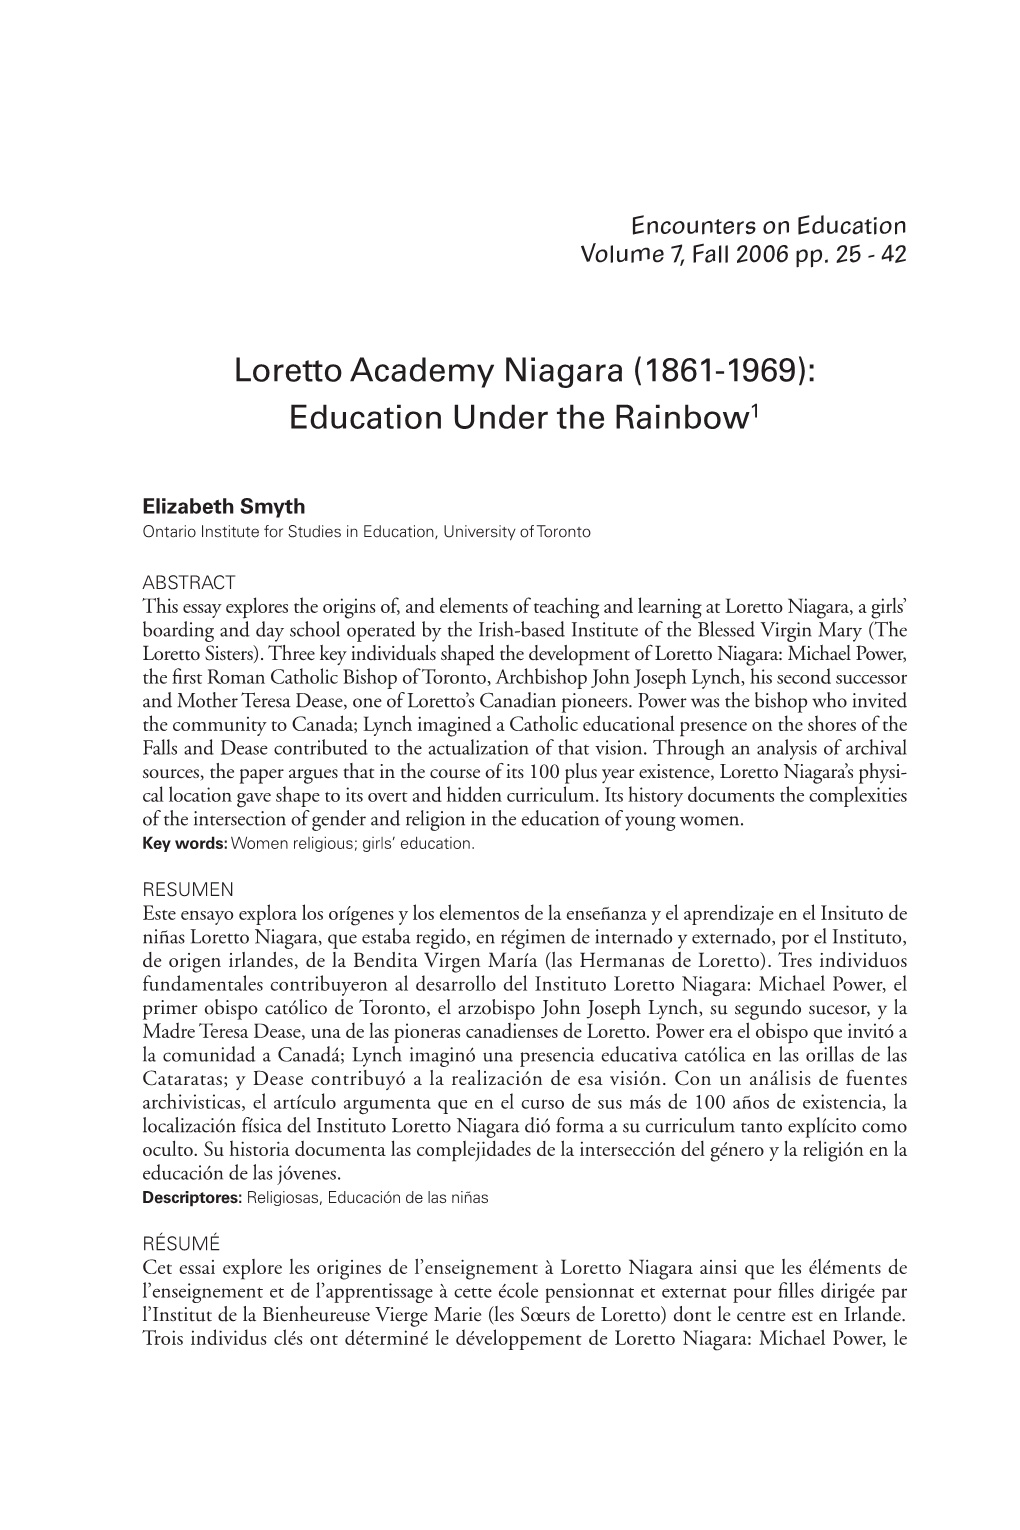 Loretto Academy Niagara (1861-1969): Education Under the Rainbow 1